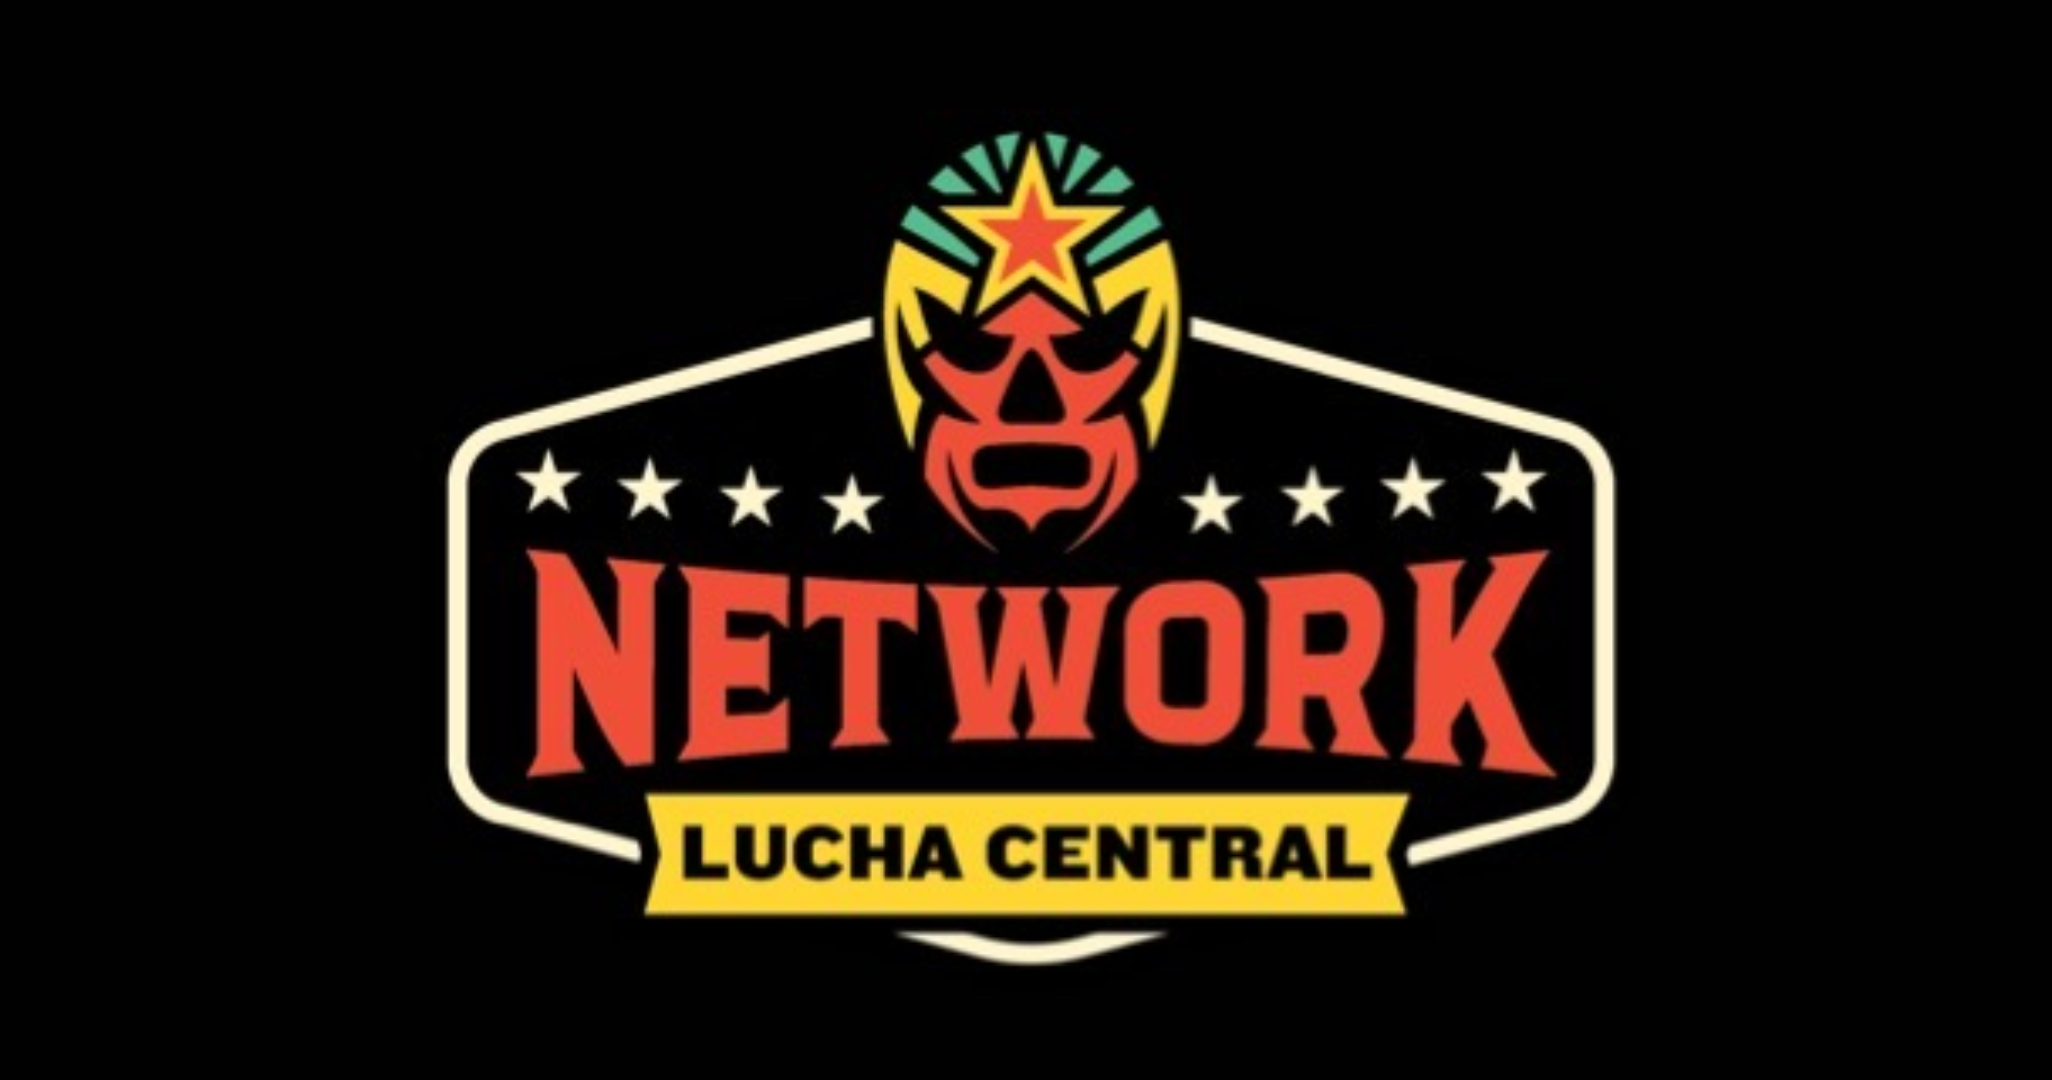 Lucha Central Network logo